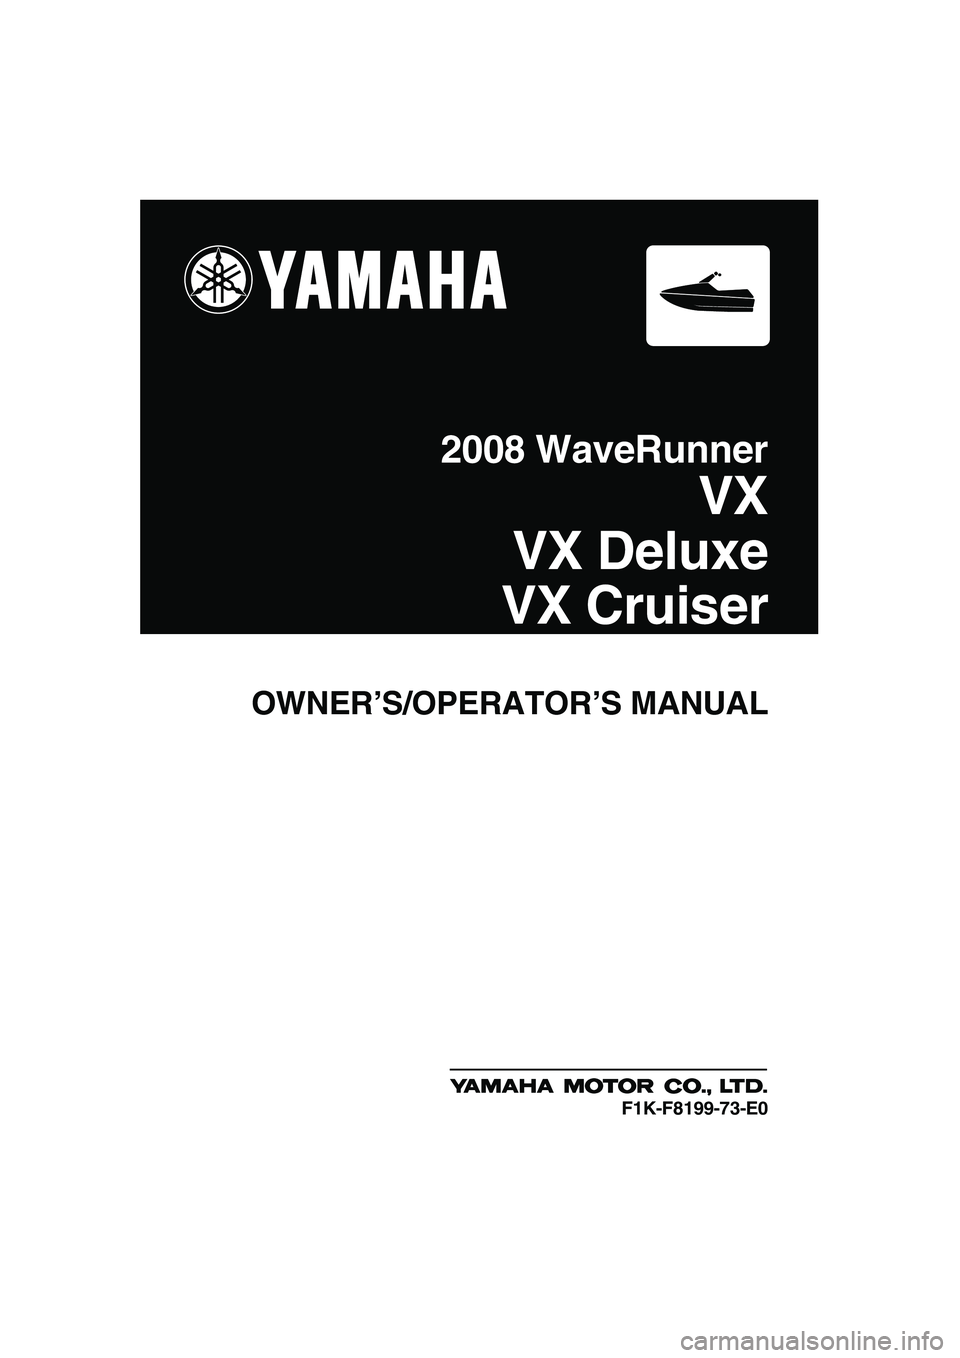 YAMAHA VX SPORT 2008  Owners Manual OWNER’S/OPERATOR’S MANUAL
2008 WaveRunner
VX
VX Deluxe
VX Cruiser
F1K-F8199-73-E0
UF1K73E0.book  Page 1  Wednesday, July 11, 2007  9:15 AM 